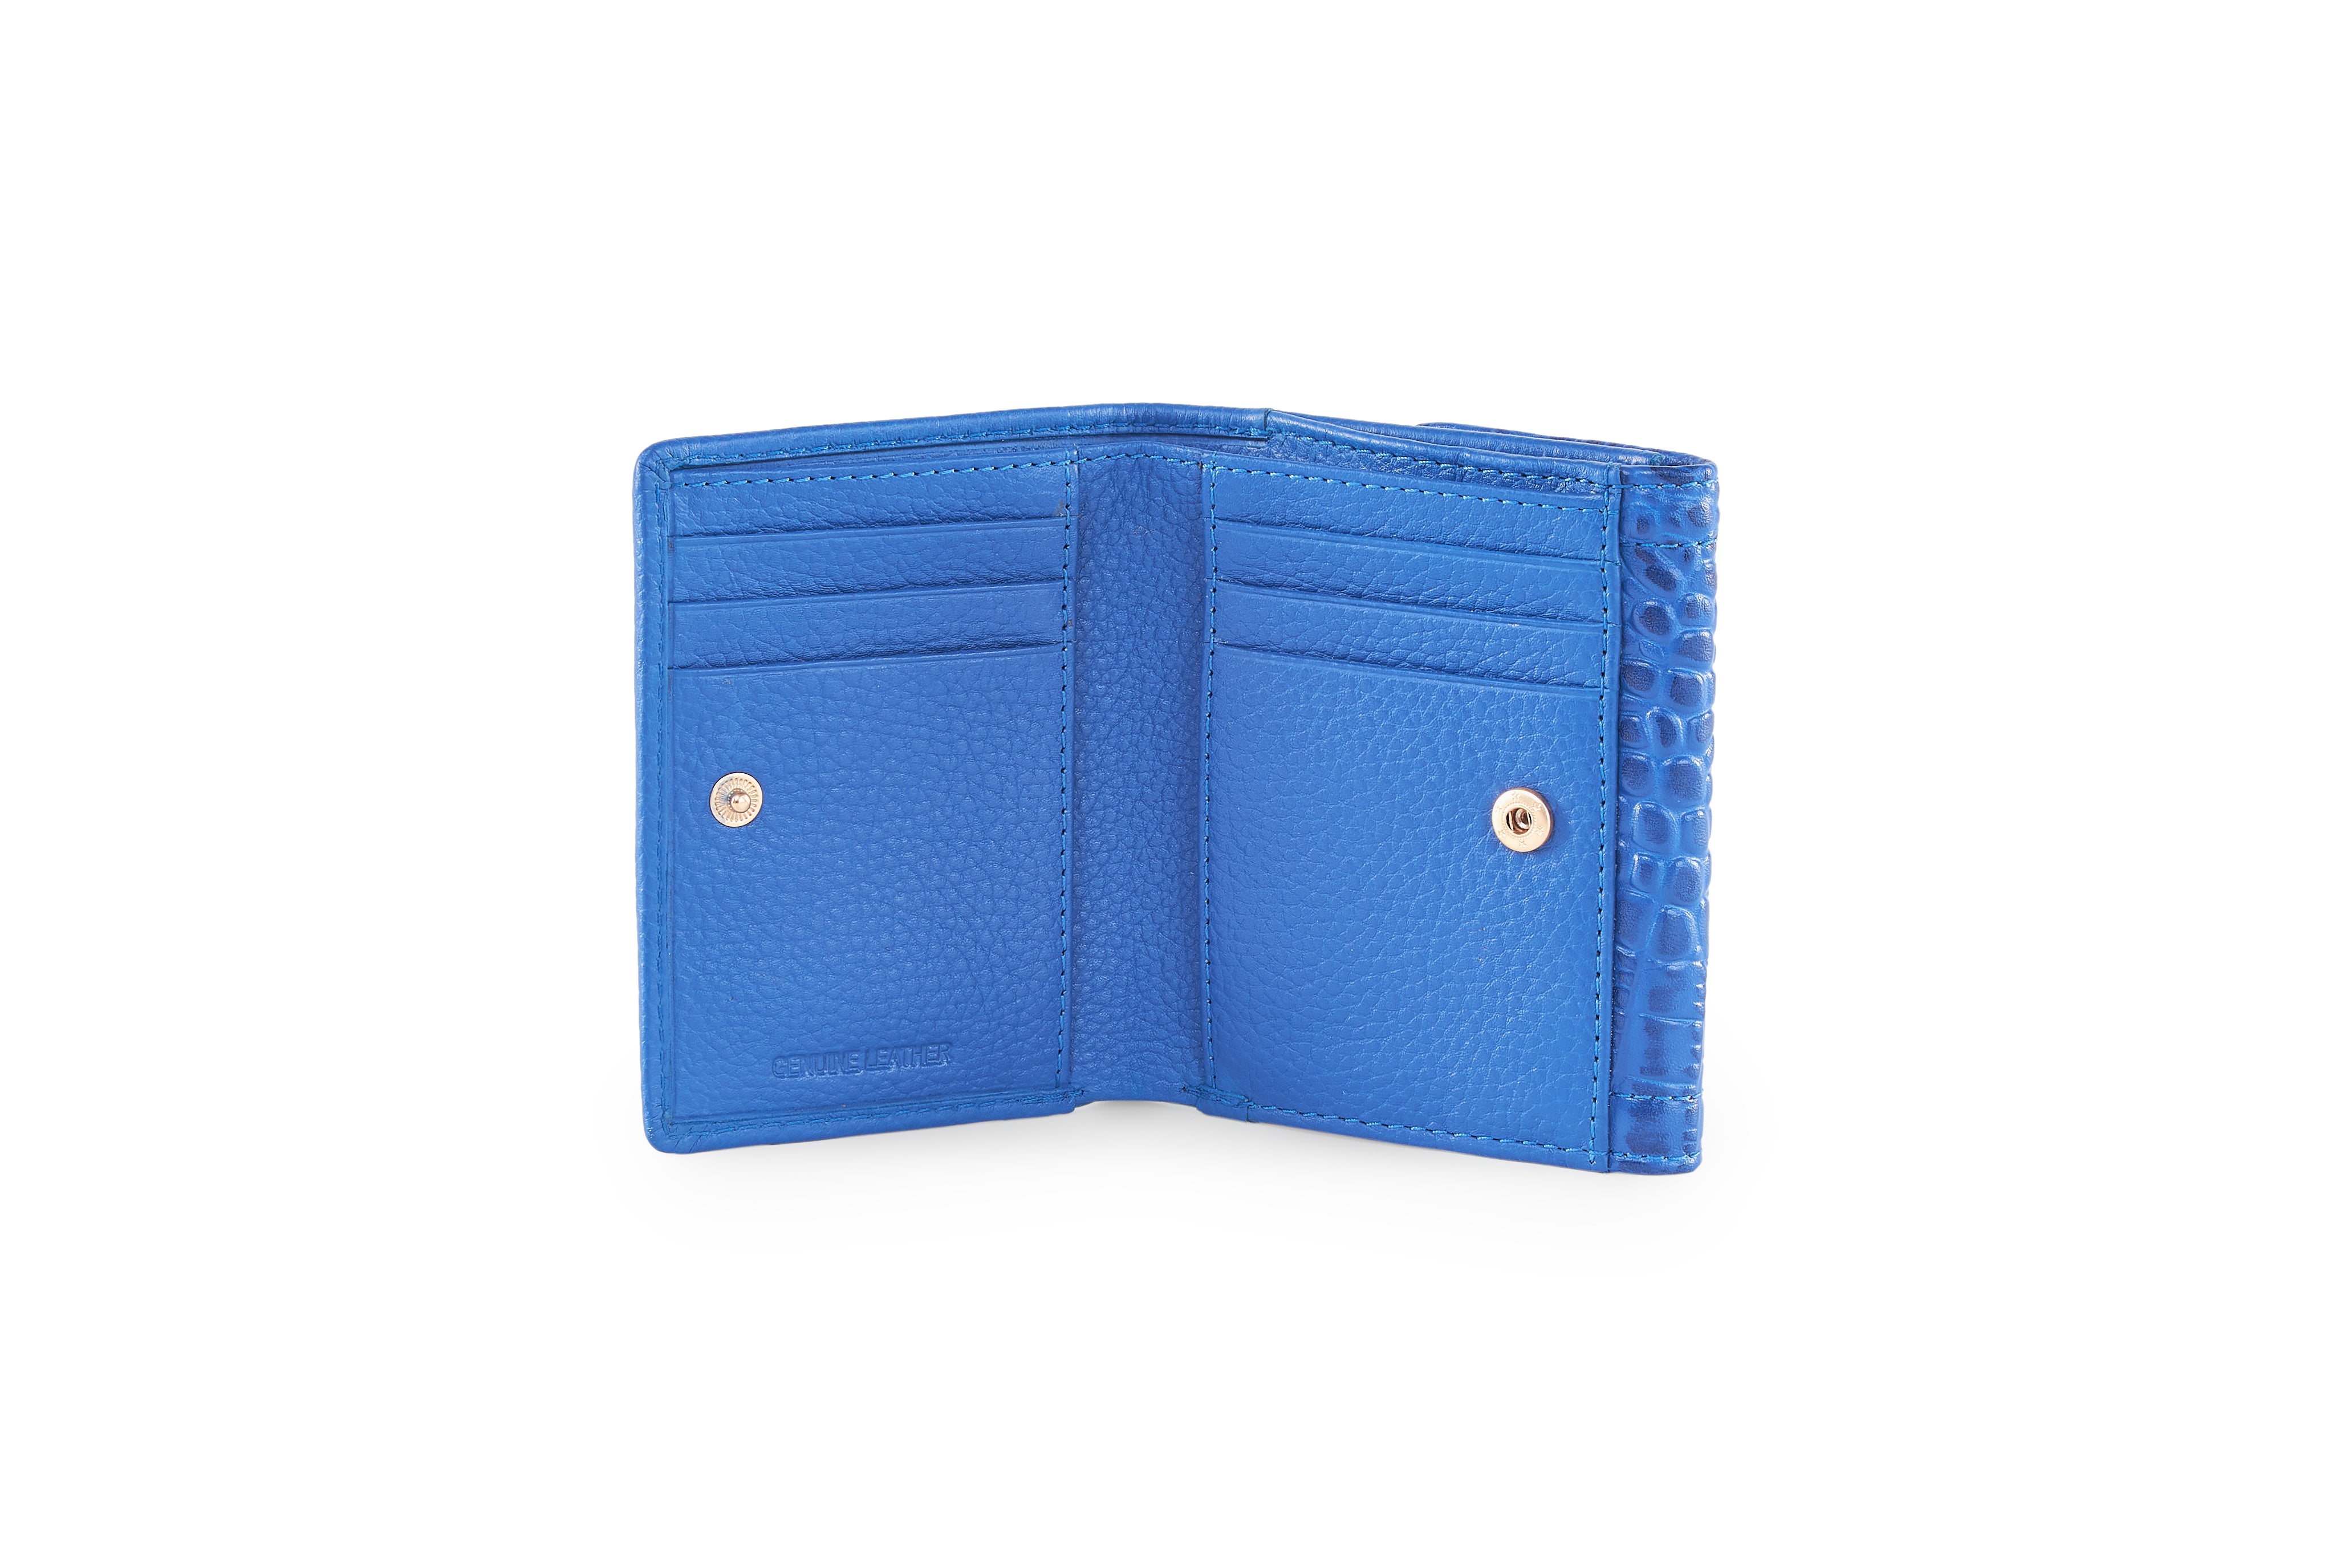 Buy Now & Get the Compact Elegance of Elia Bifold Wallet